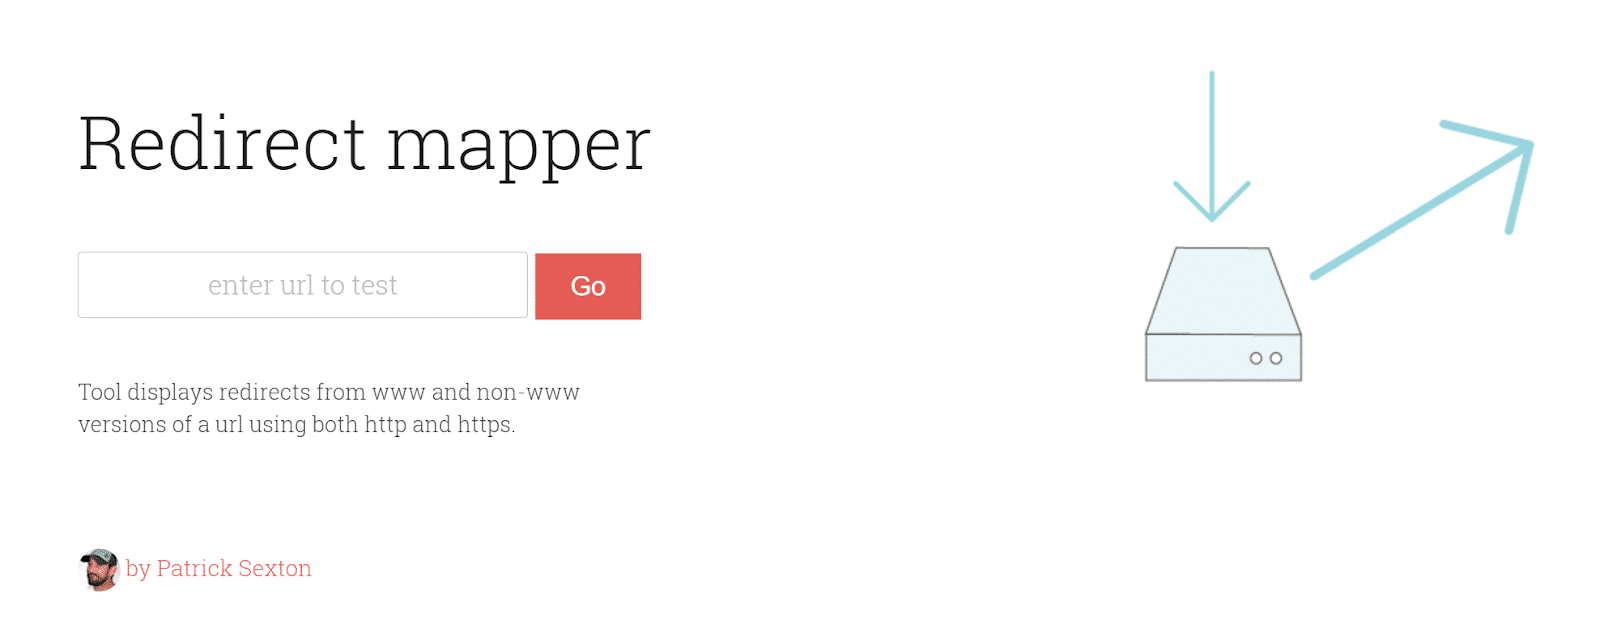 Das Redirect-Mapper-Tool